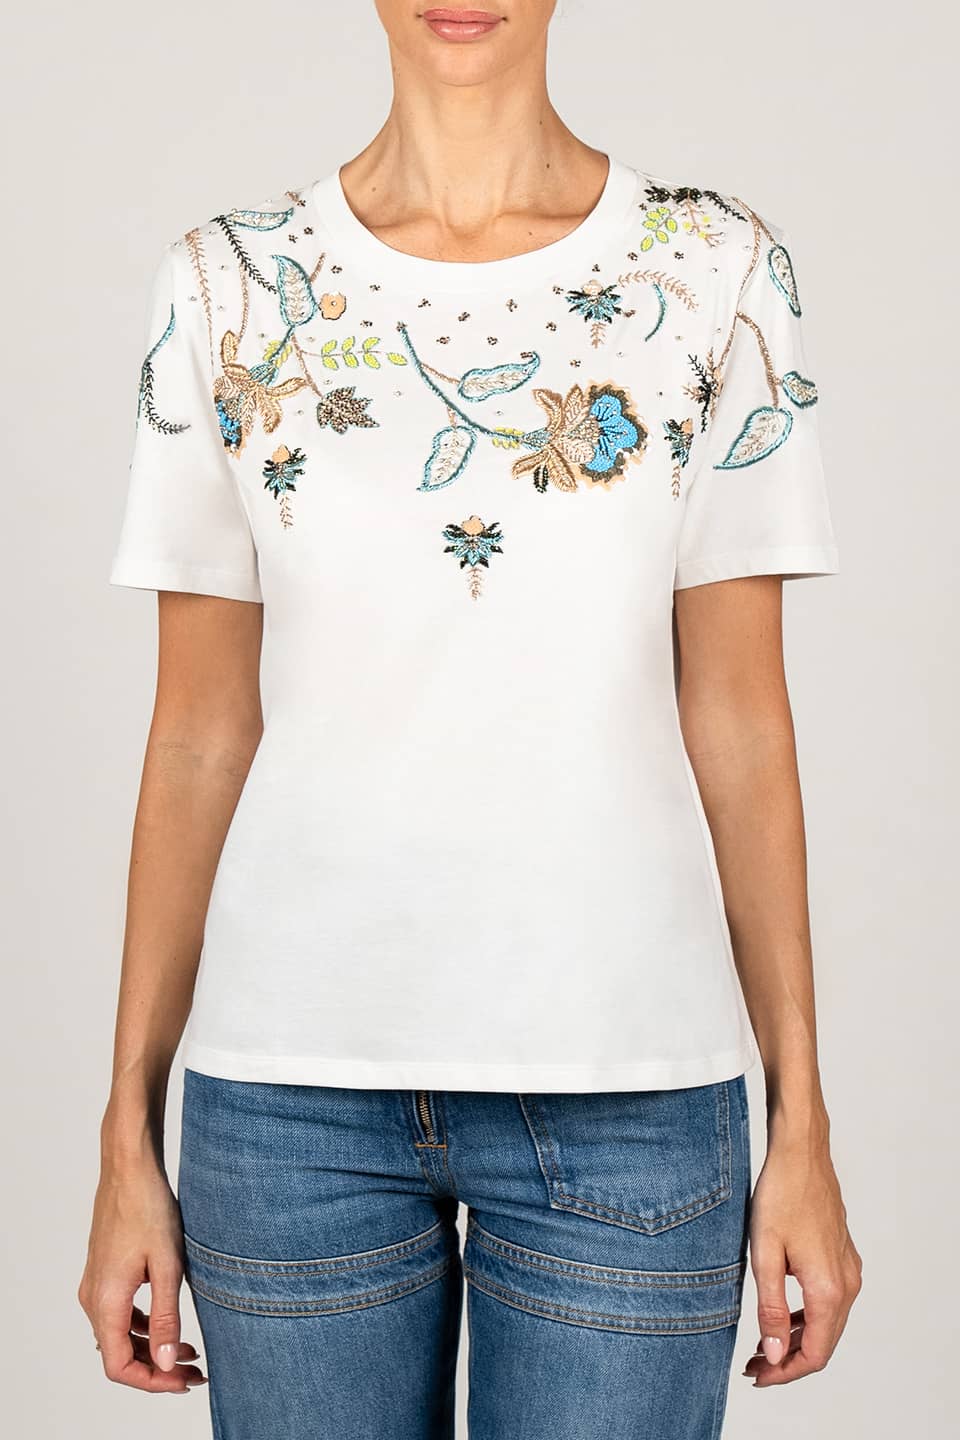 Shop online fashion designer white t-shirt. Product gallery 1